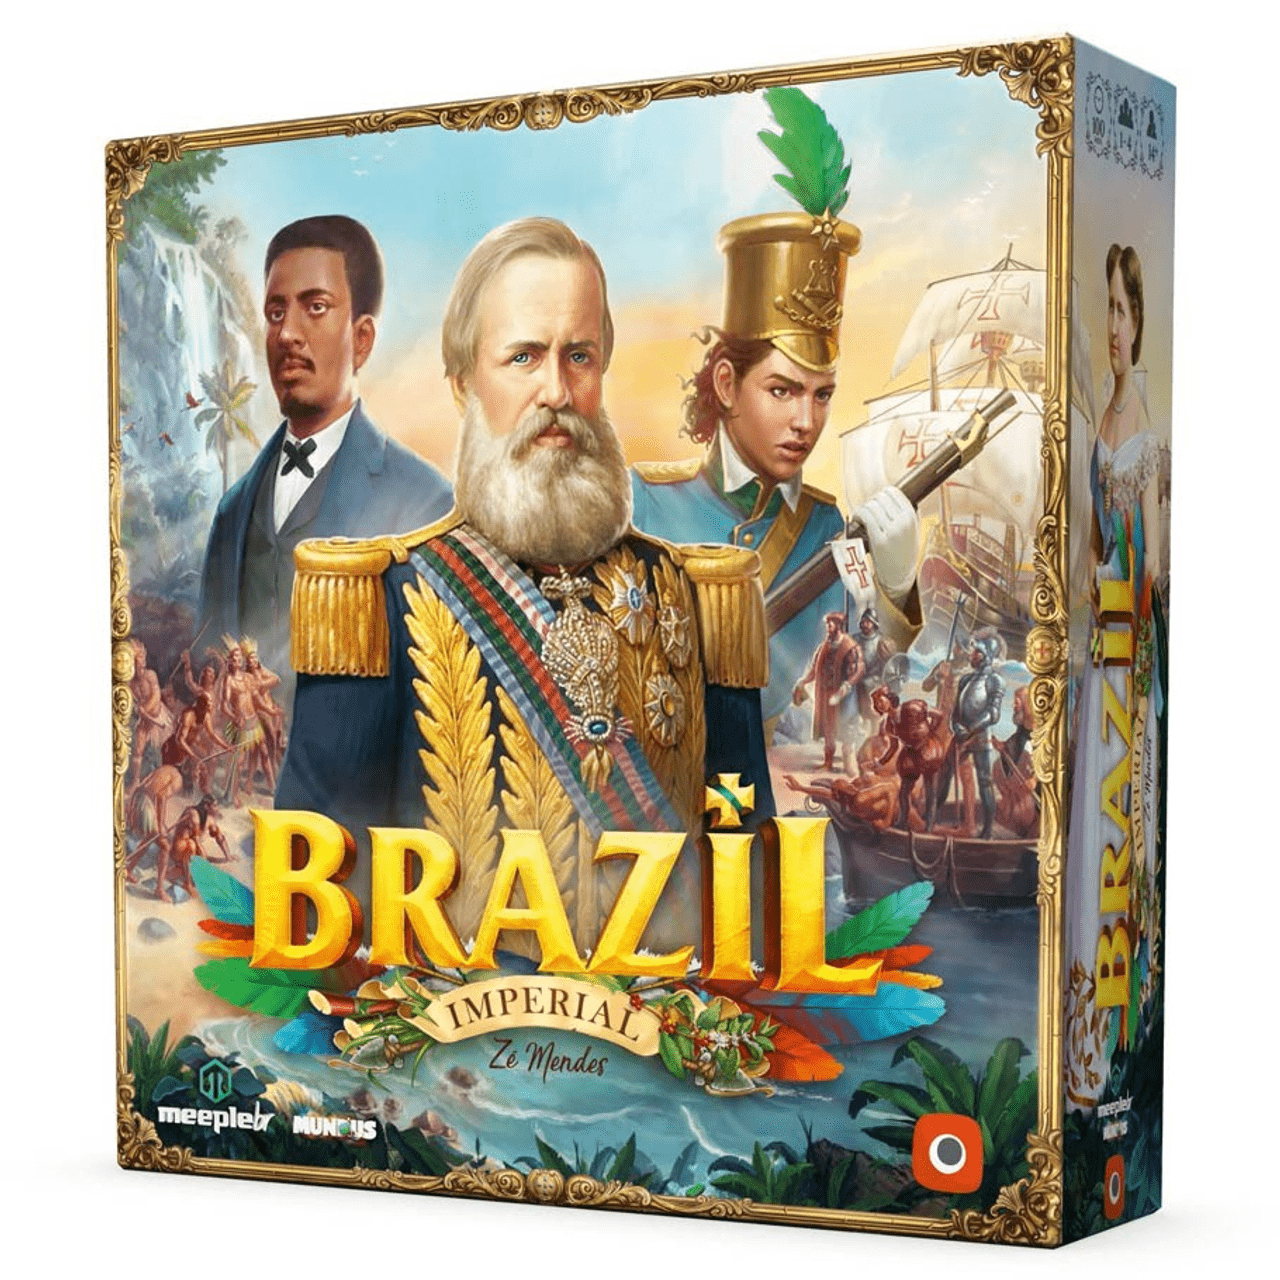 Brazil: Imperial - Third Eye